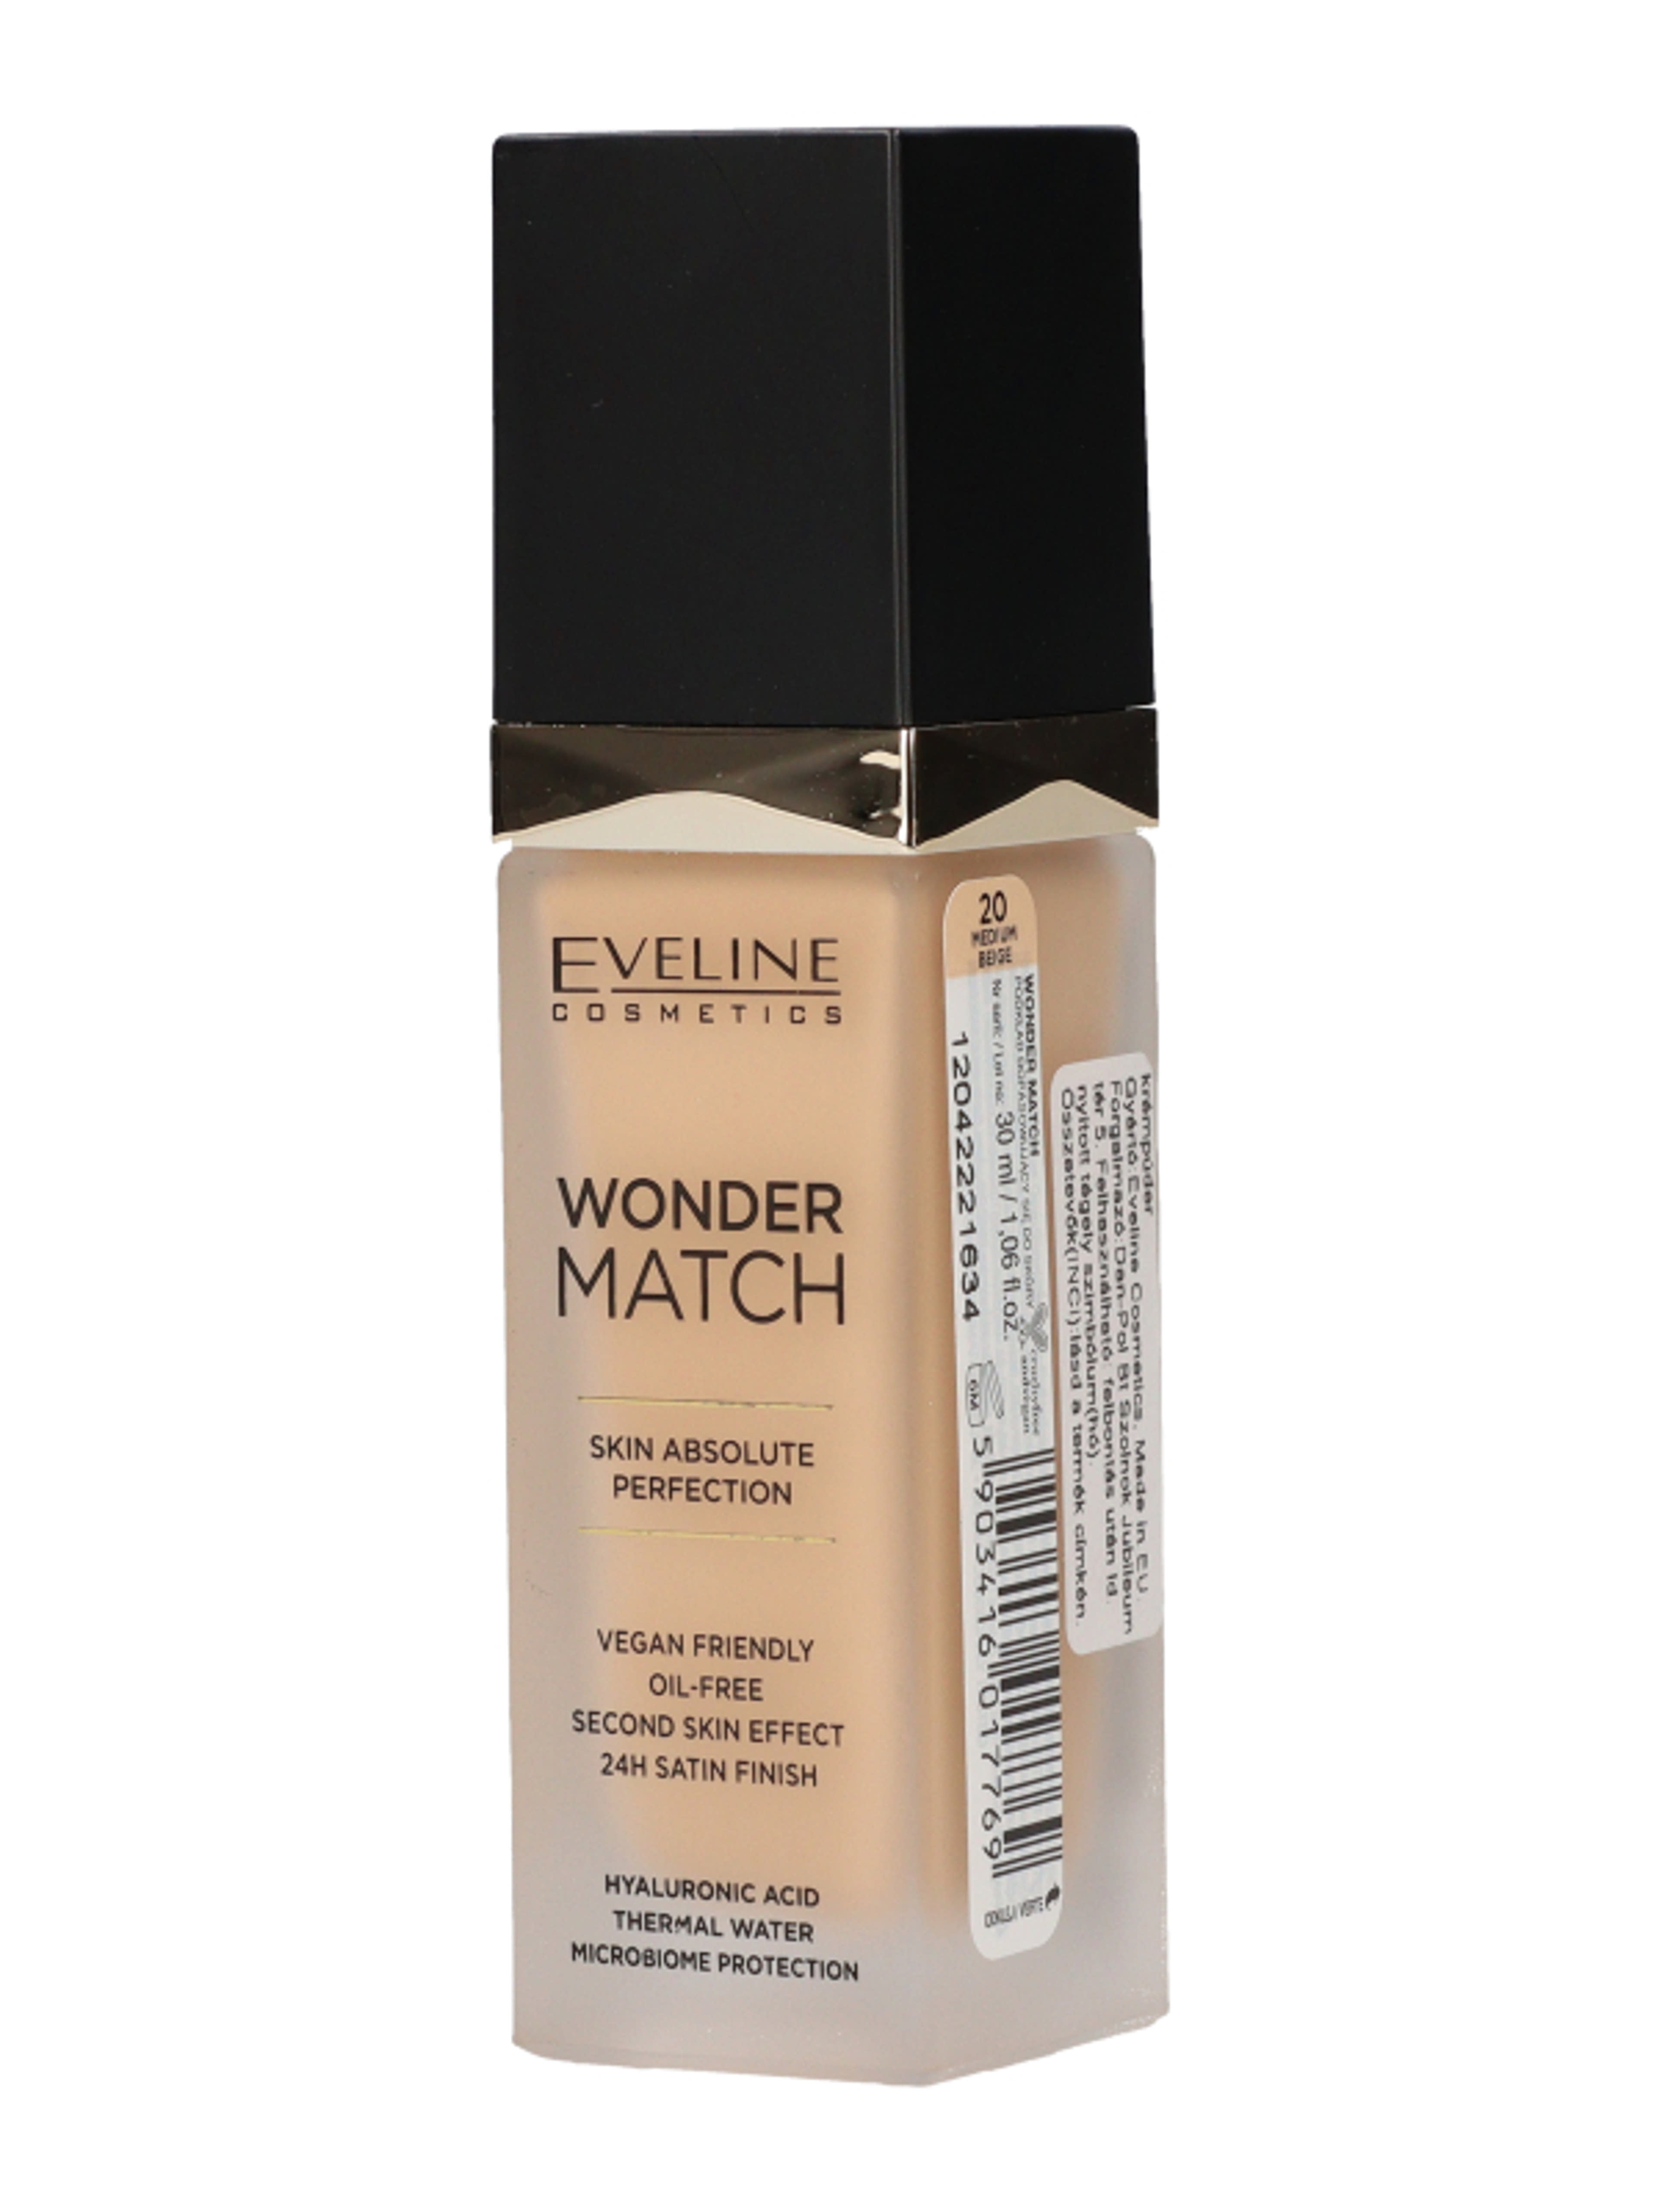 Eveline Wonder Match alapozó /20 Medium beige - 1 db-4